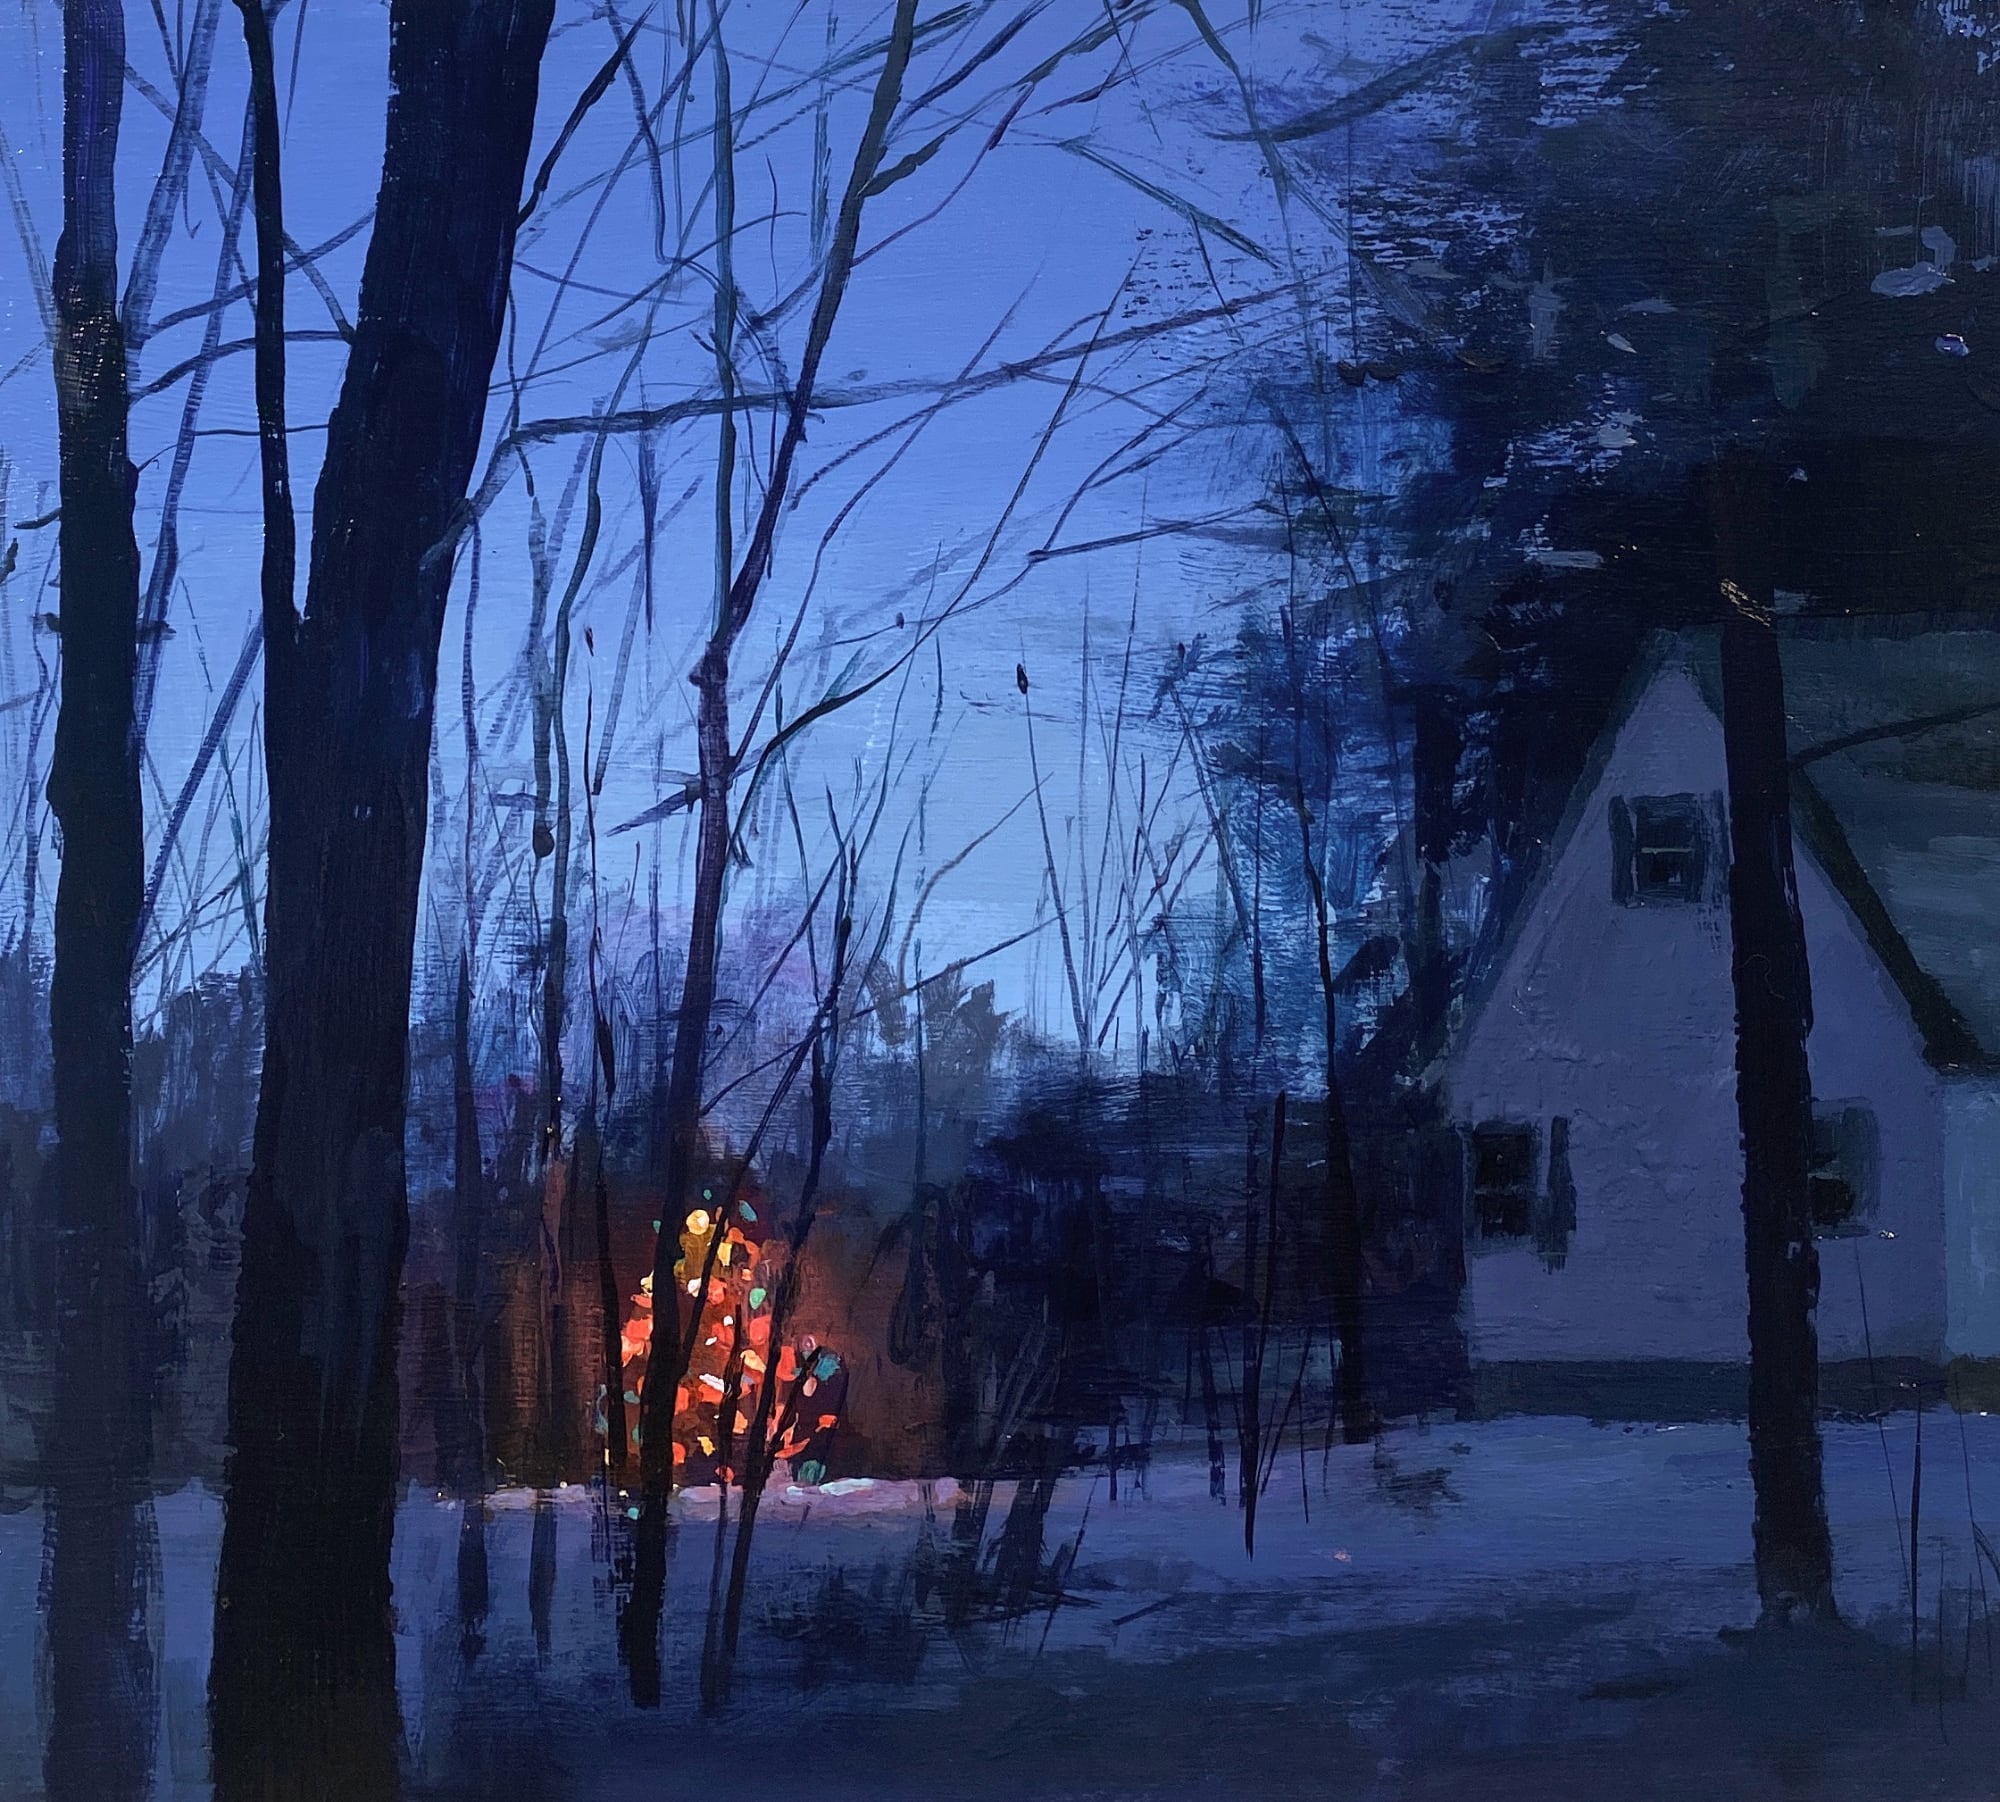 Holiday Lights Warm the Dark Winter Nights of Jeremy Miranda’s Paintings